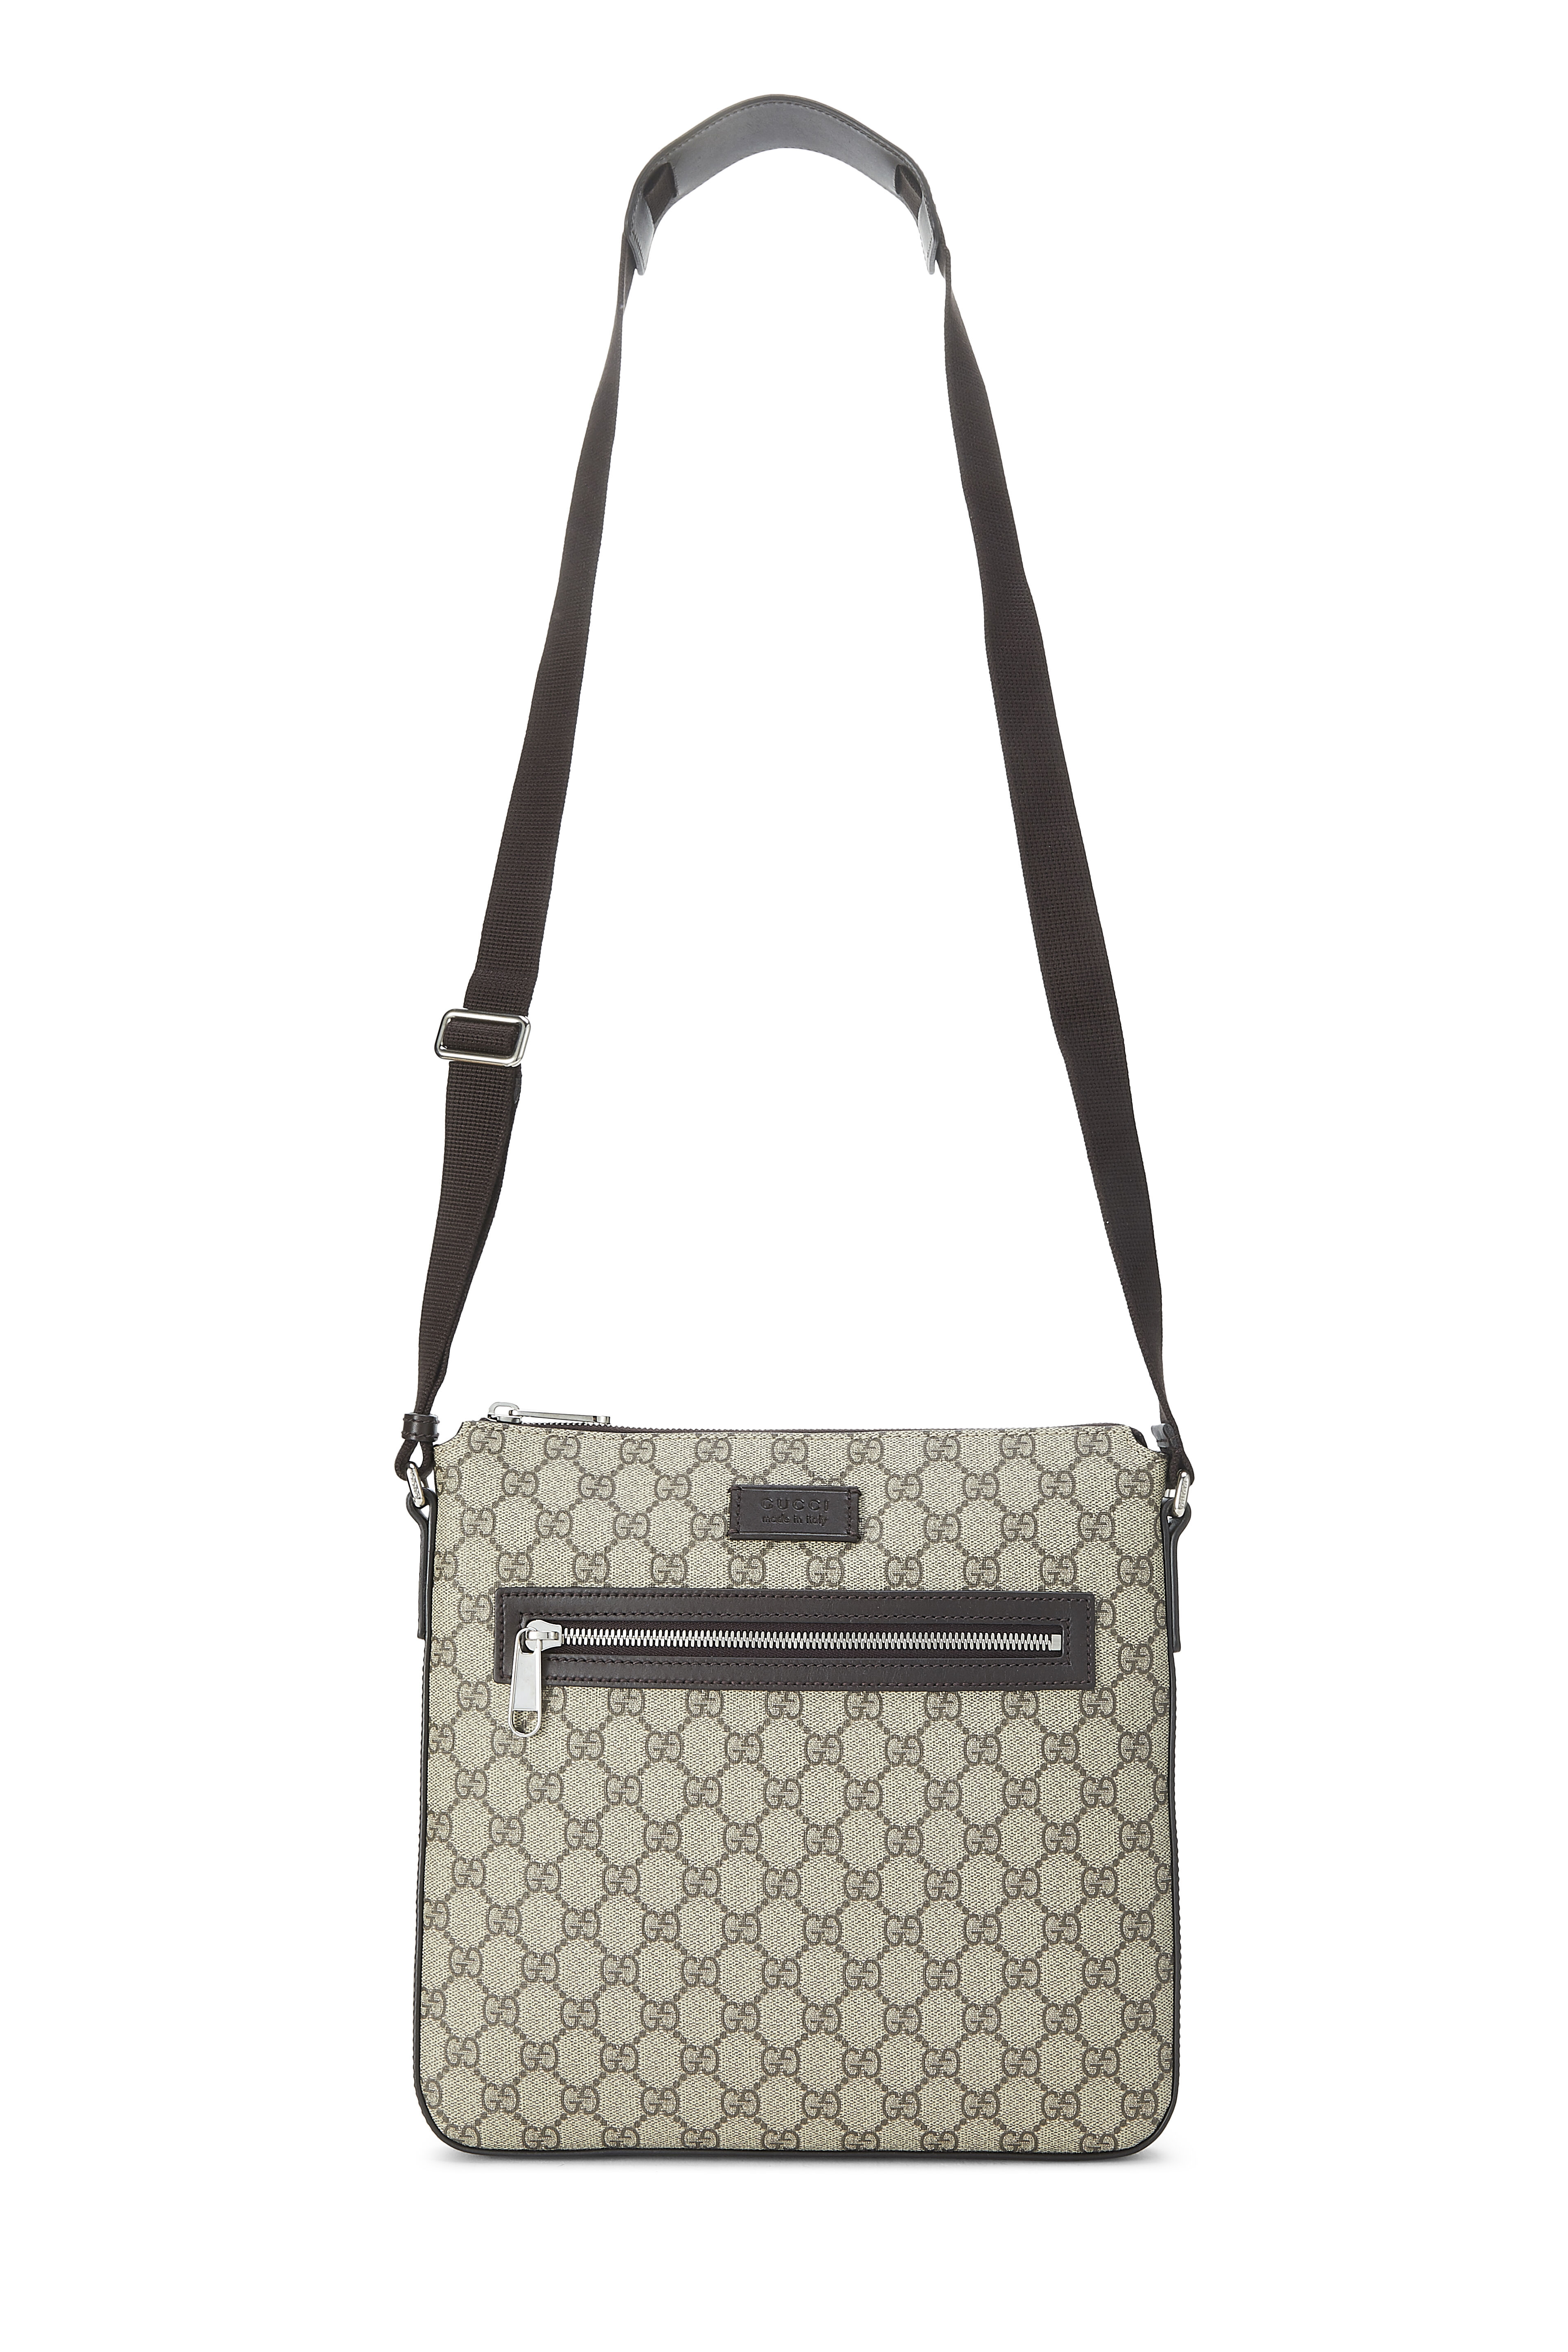 Gucci Flat Messenger Bag – The Bag Broker